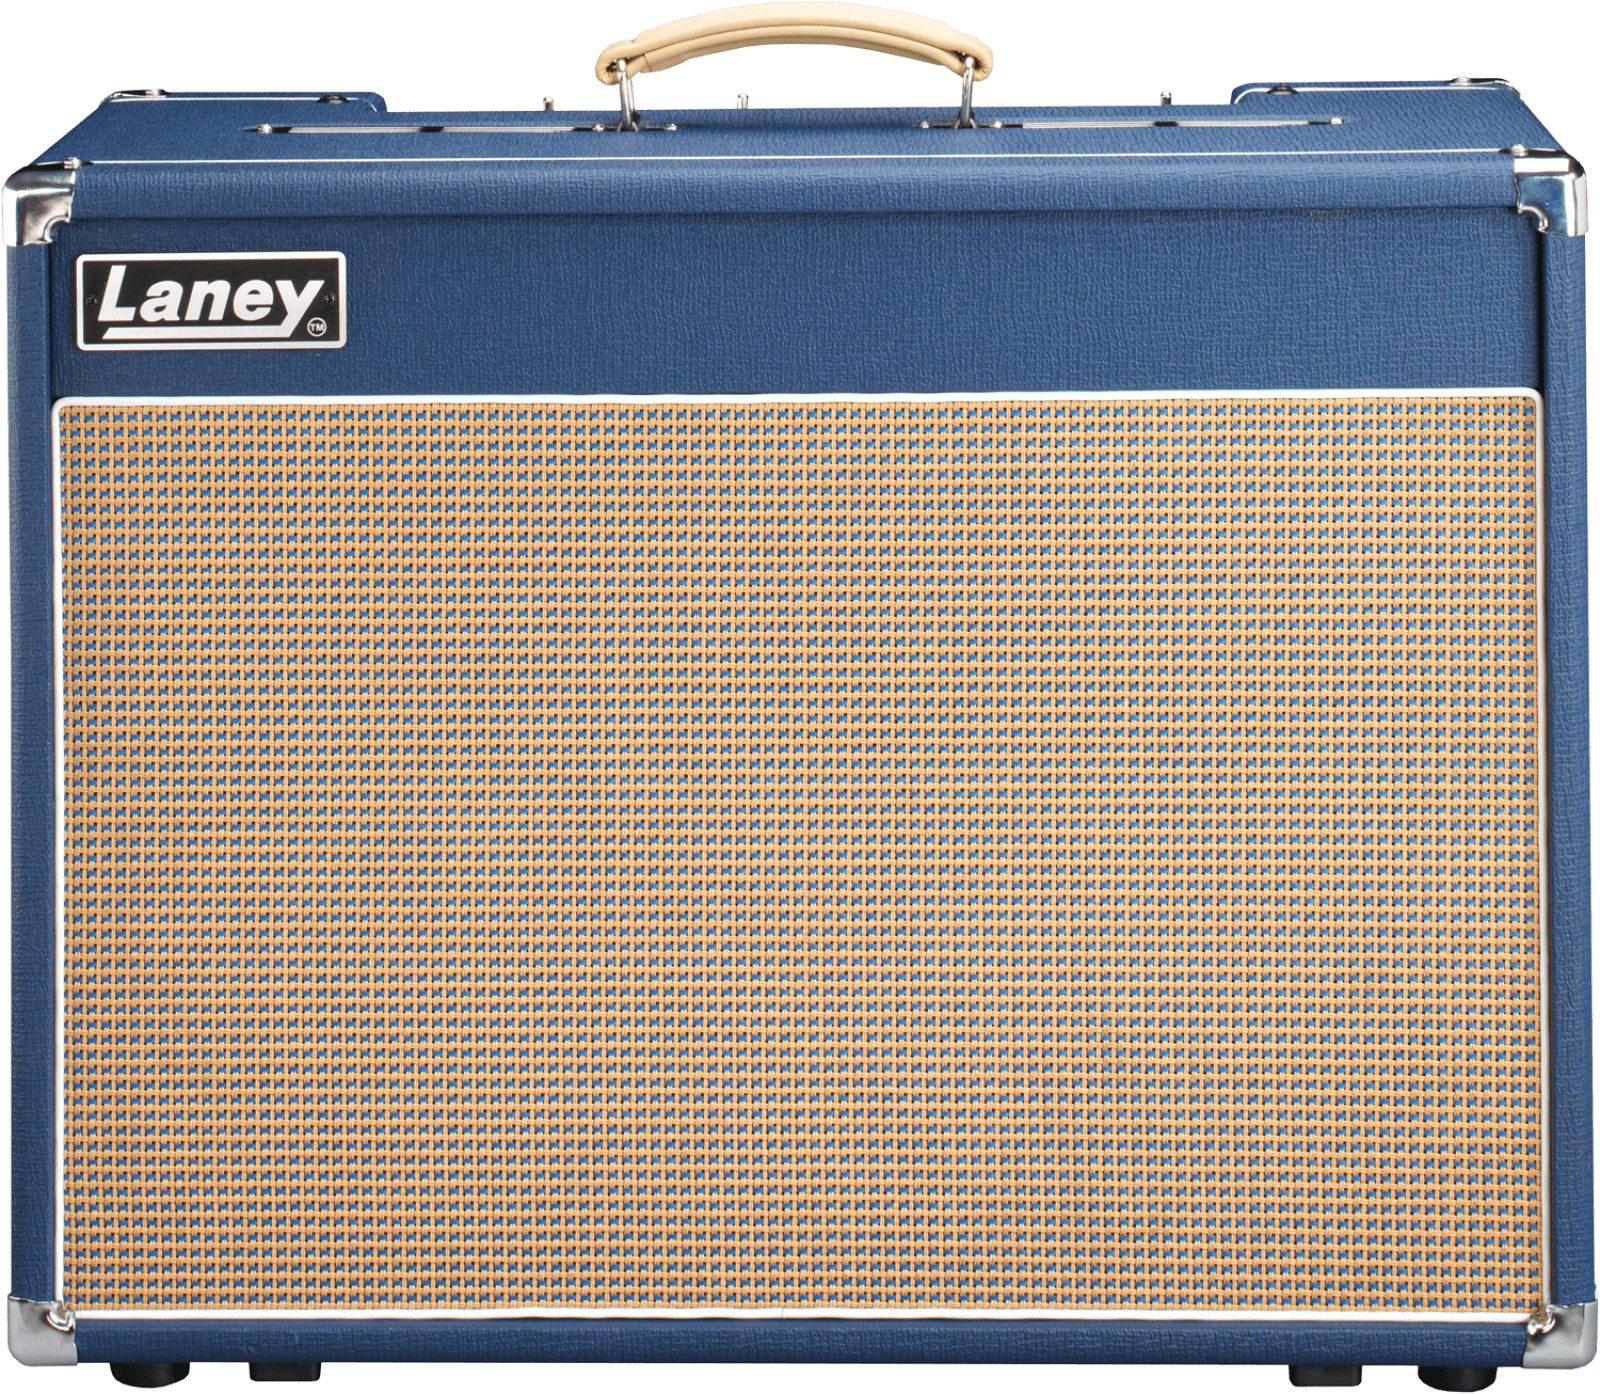 Laney amps